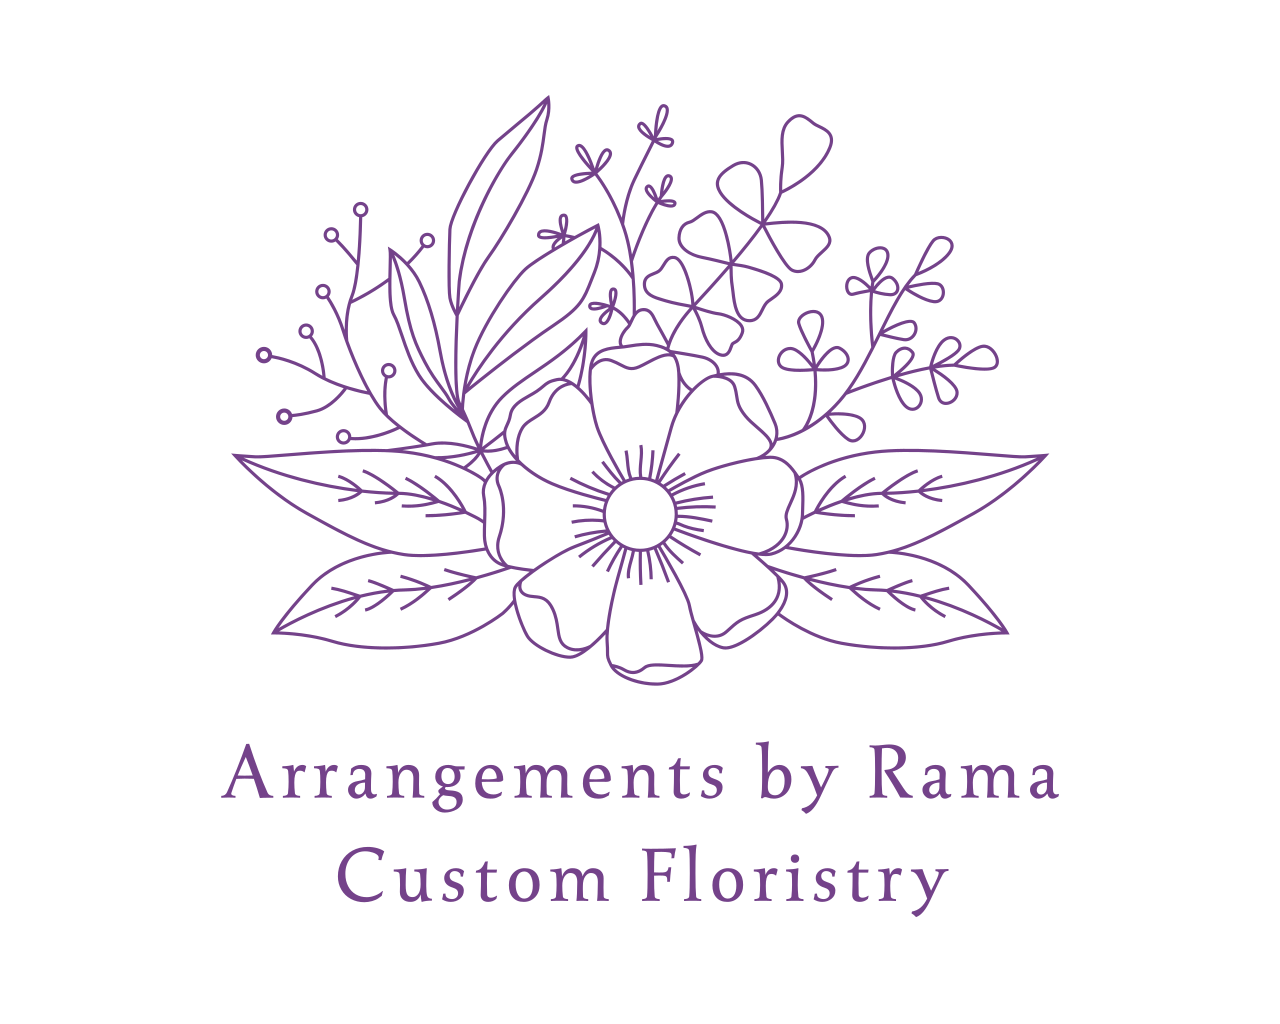 Arrangements by Rama